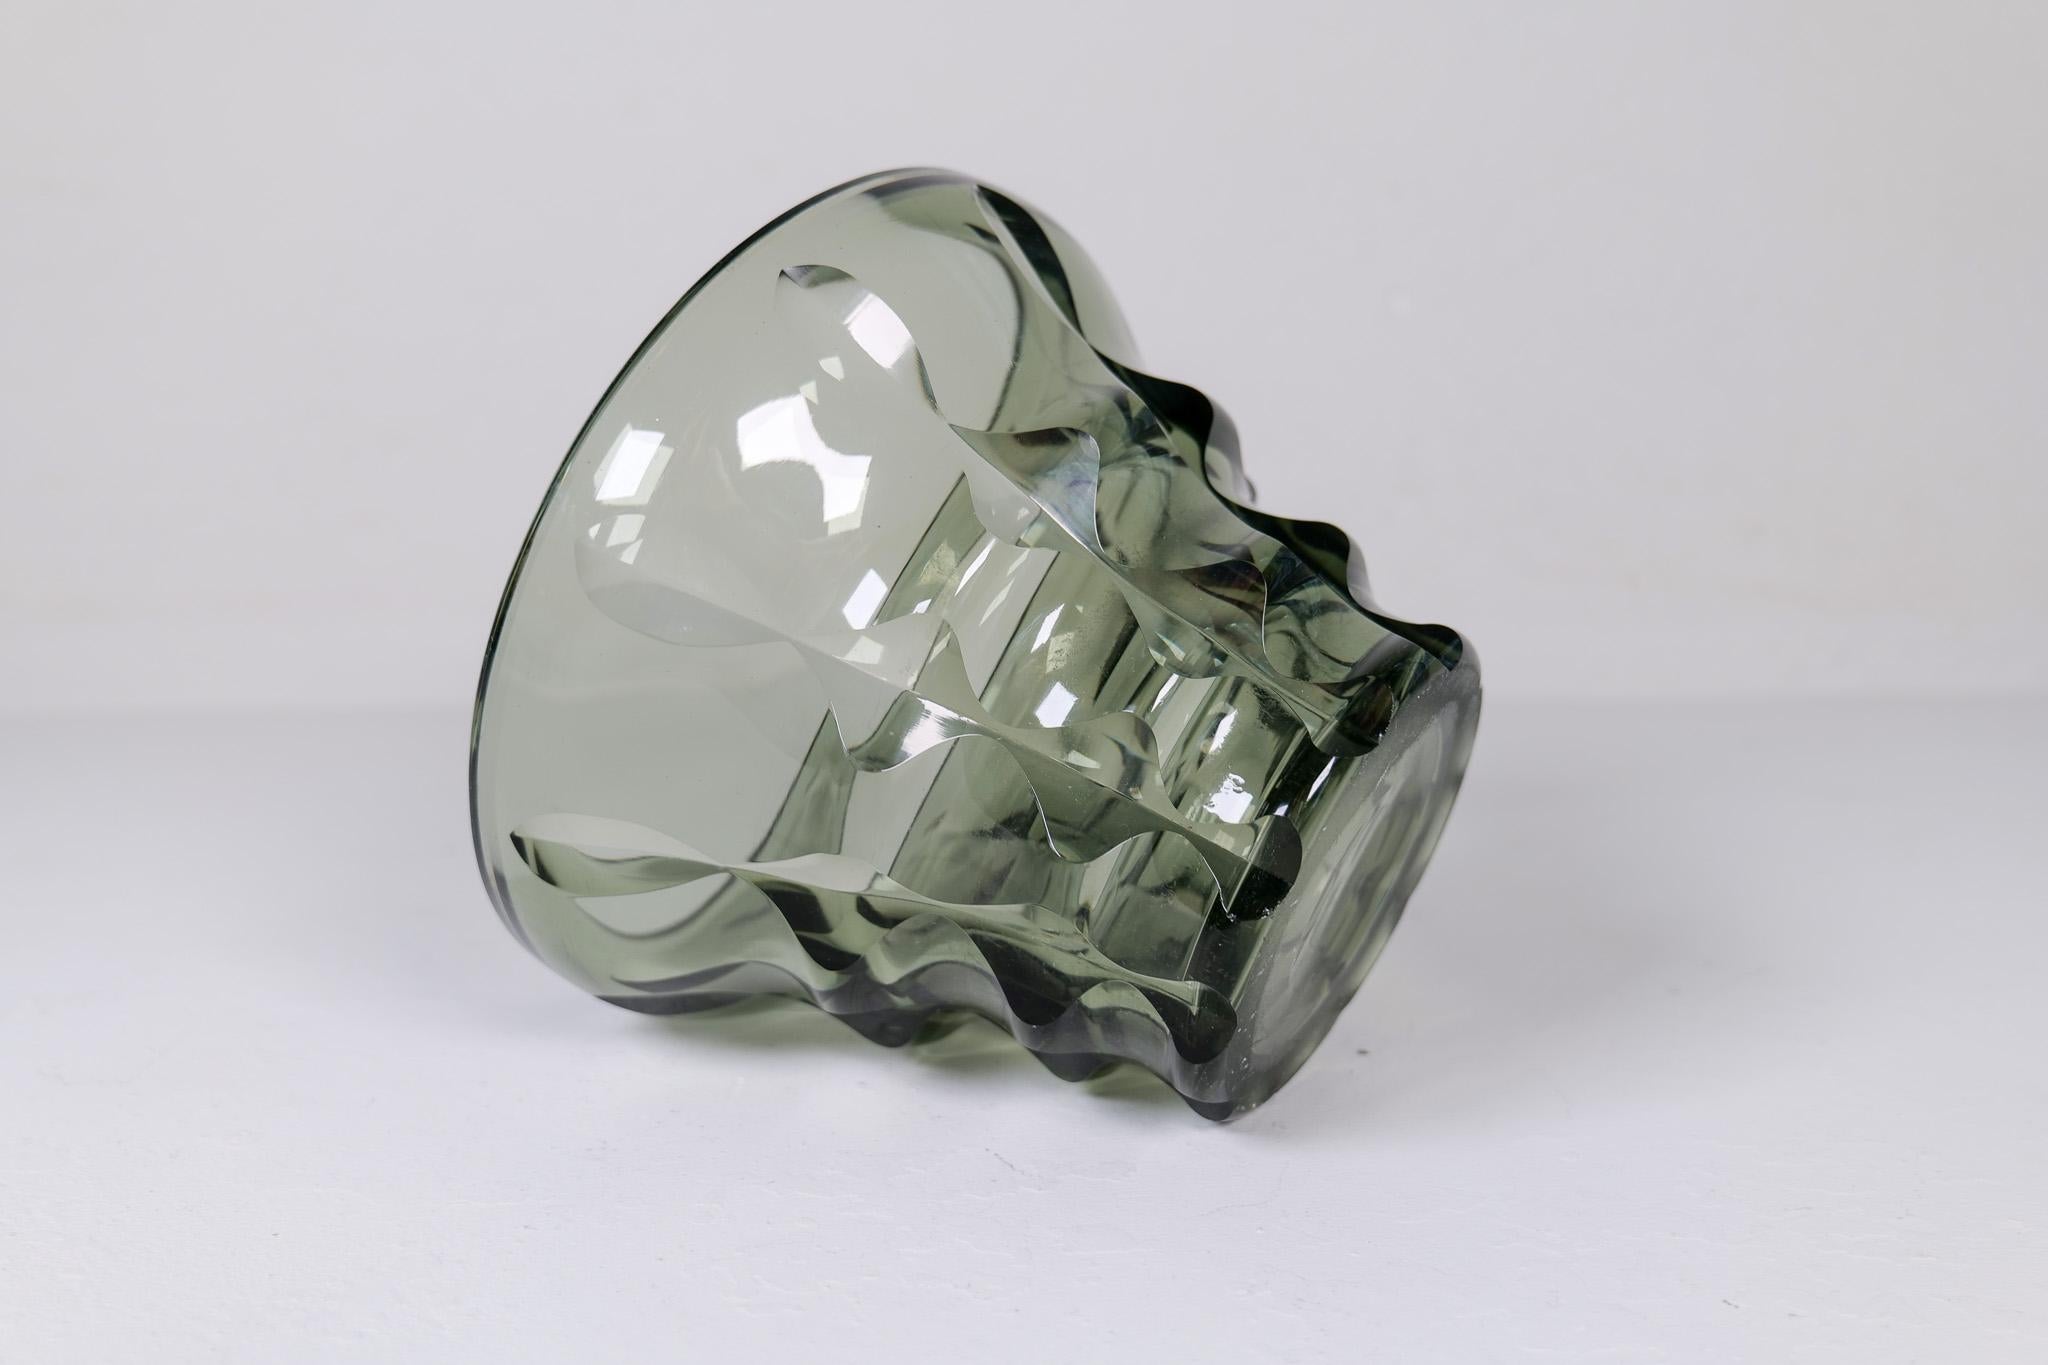  Art Deco Glass Bowl Sweden 1930s  For Sale 3